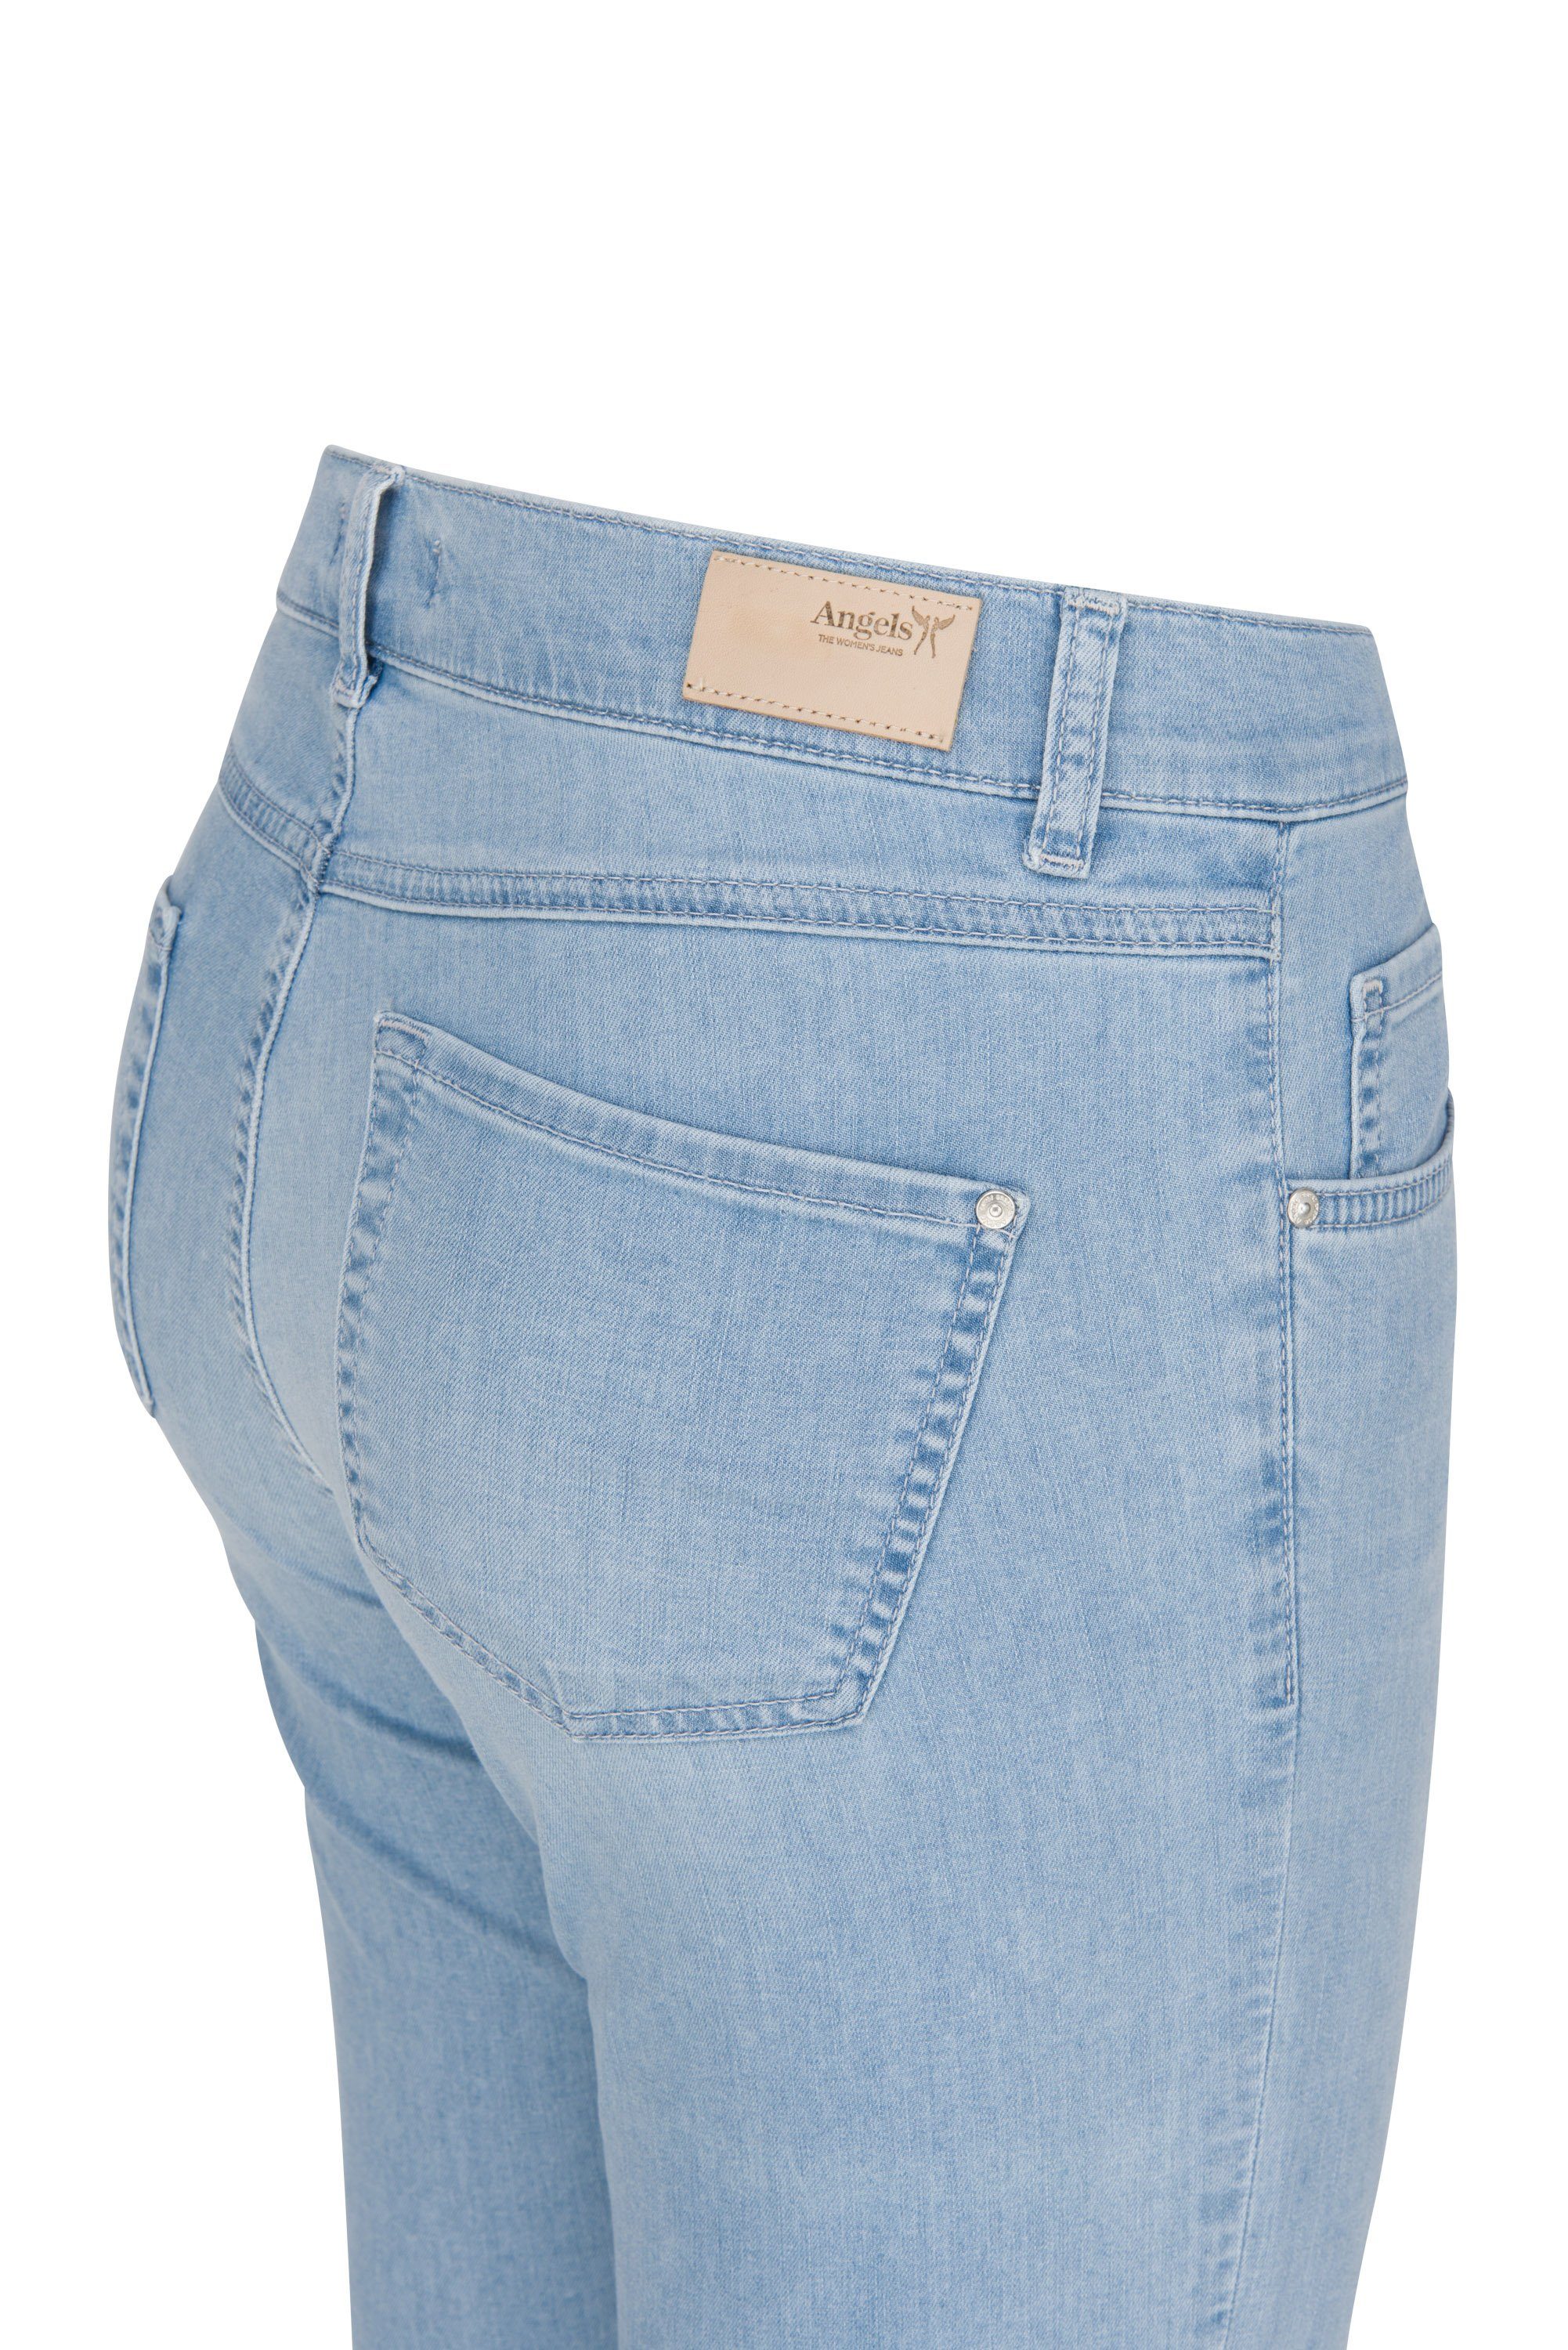 Stoffgewicht: Capri oz 7,5 mit 5-Pocket-Jeans ANGELS Jeans Used-Look Label-Applikationen, mit TU